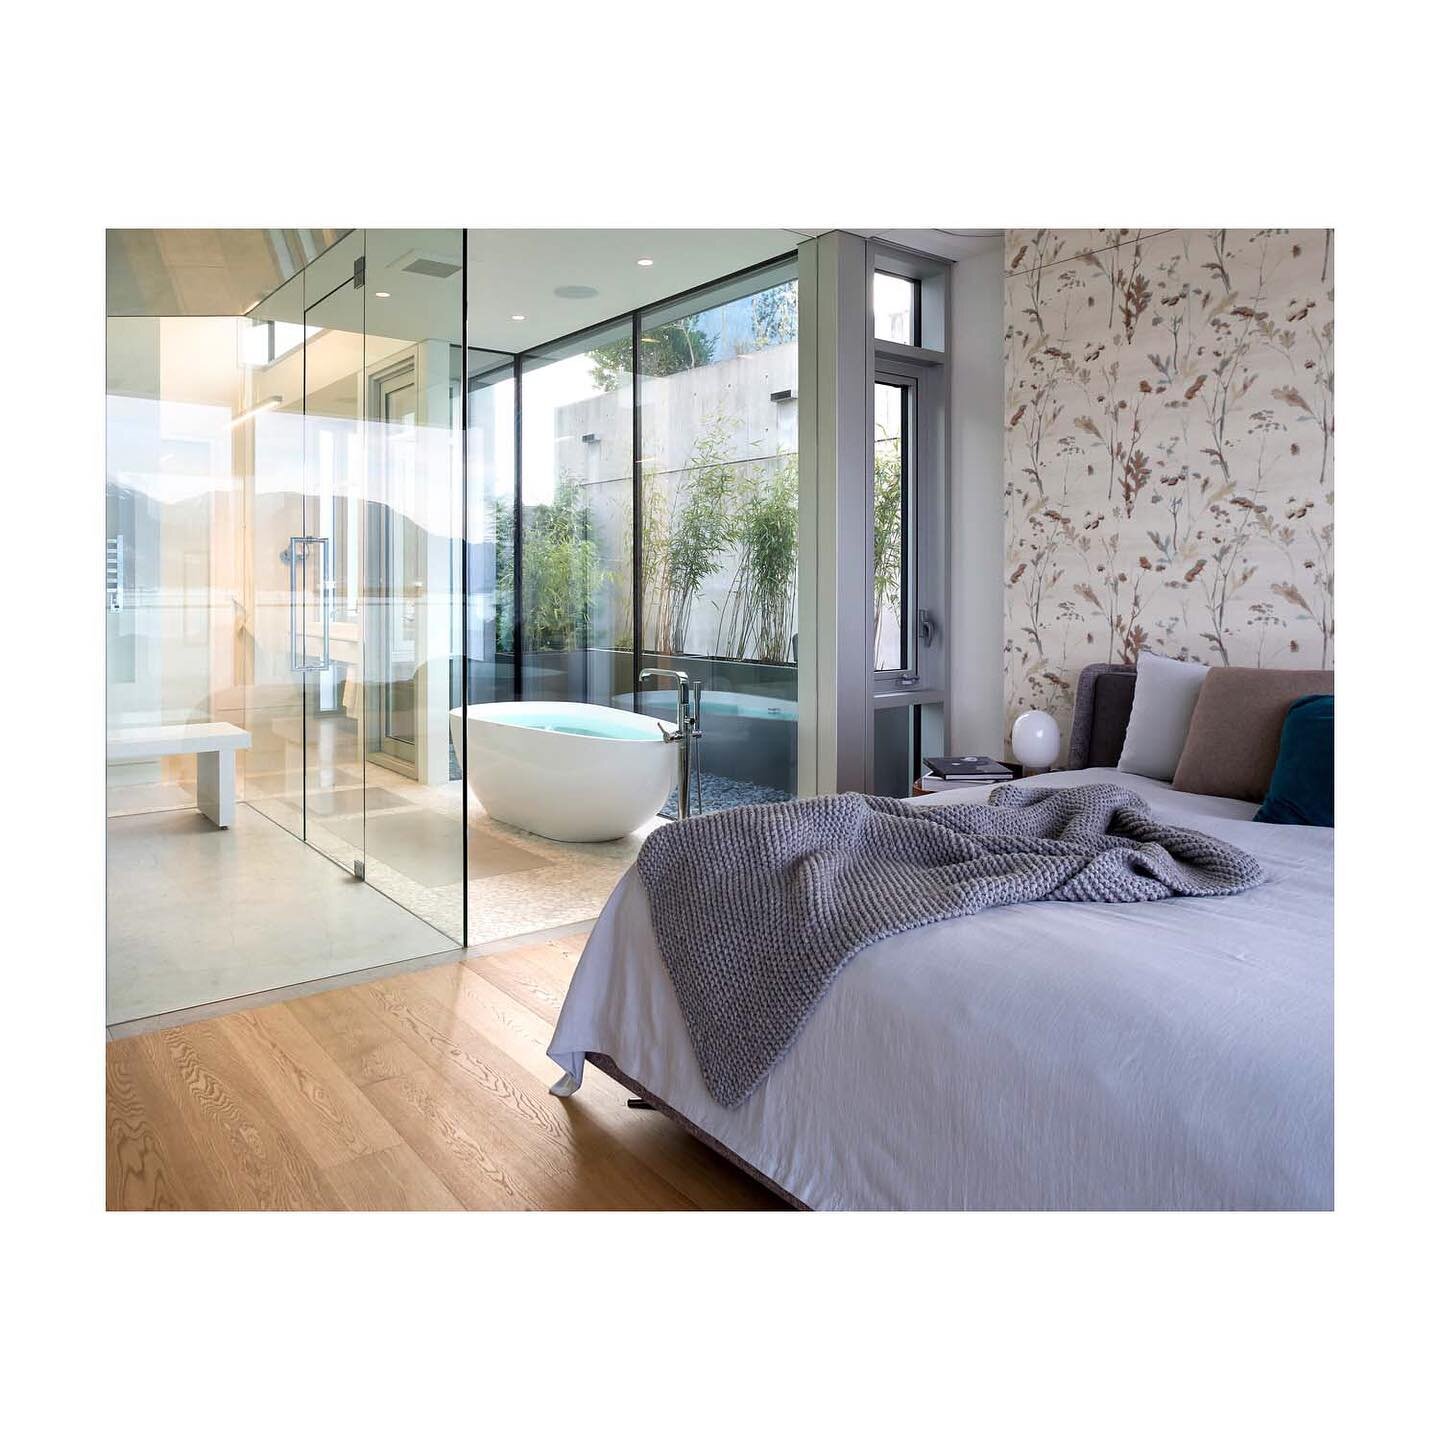 Point Grey Residence / Lamoureux Architect / Vancouver BC
.
.
.
.
.
.
.
.
@lamoureuxarchitect 
#innenarchitektur #interiorwarrior #interior2you #bedroomdesignideas #instaarchitecture #archigram #bedroomdecor #architecturelover #bedroomdesign  #modern